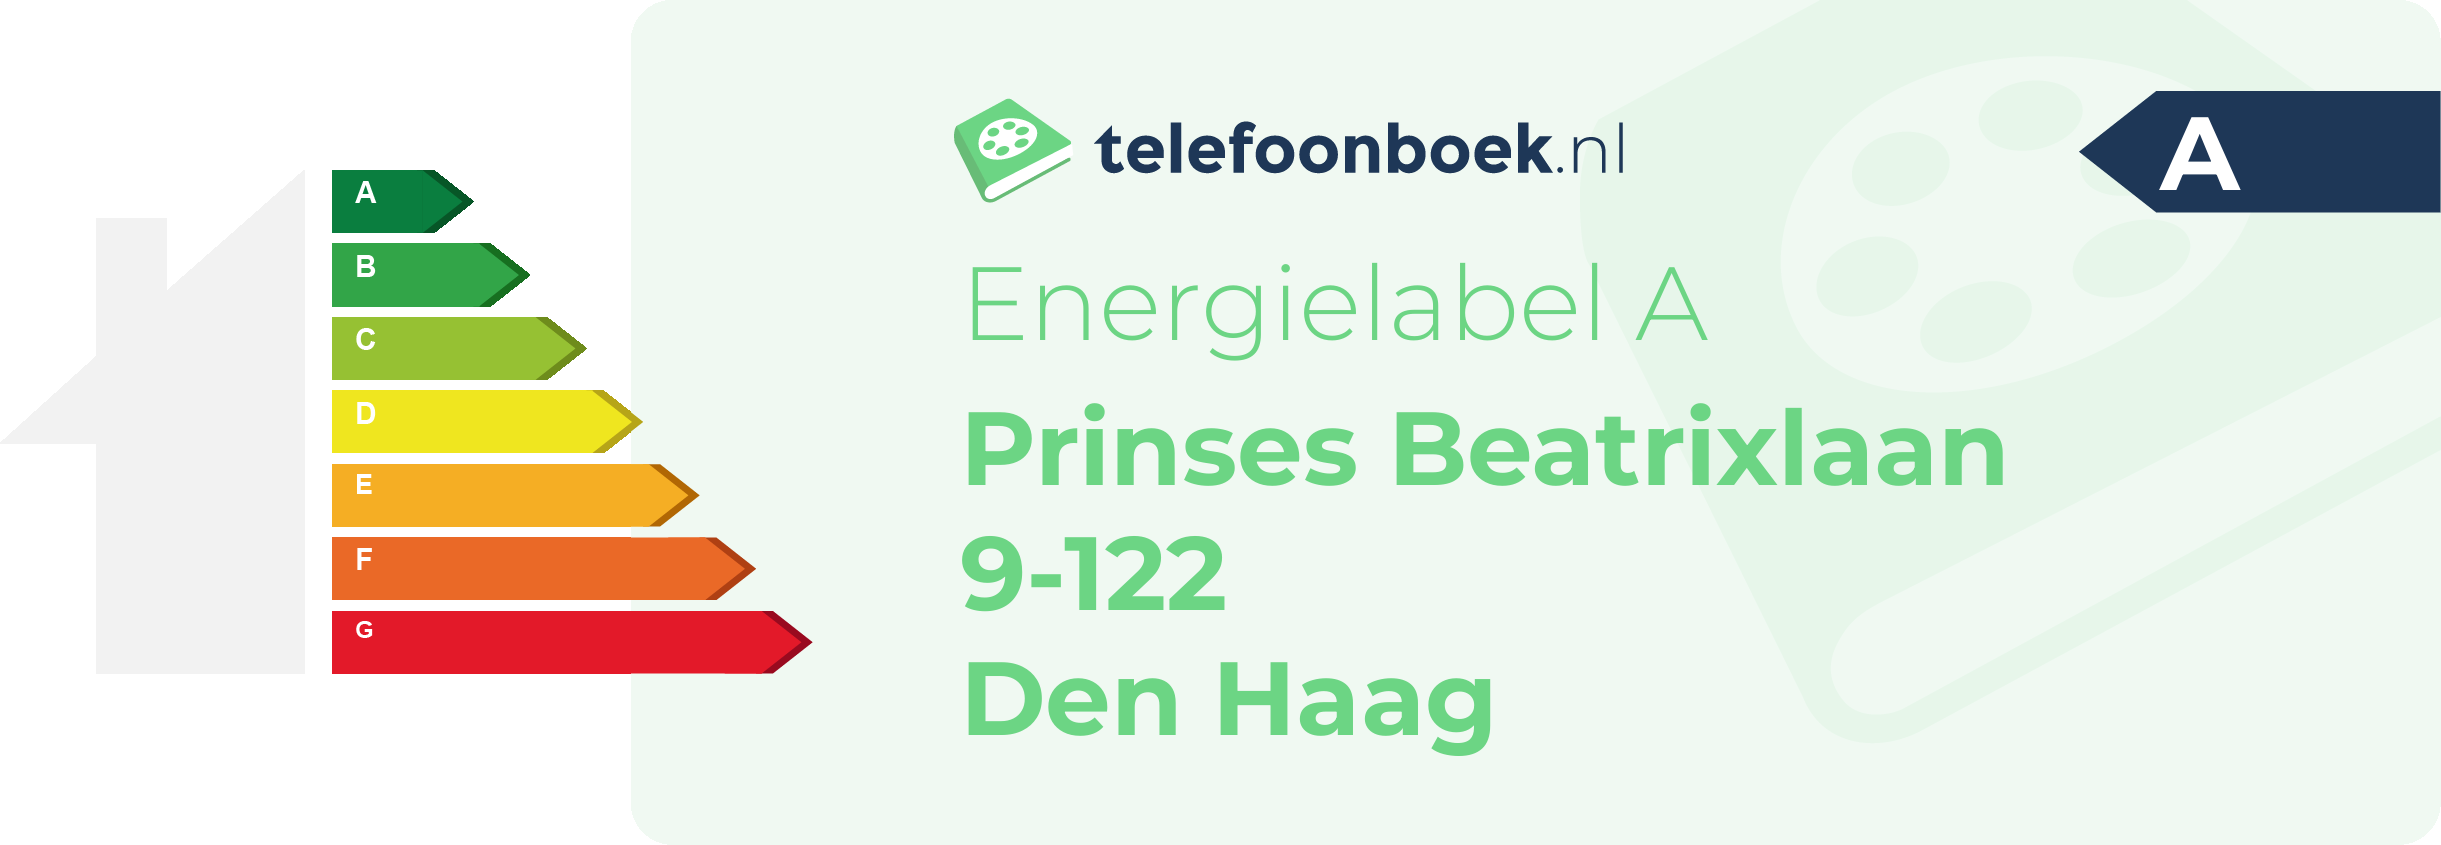 Energielabel Prinses Beatrixlaan 9-122 Den Haag